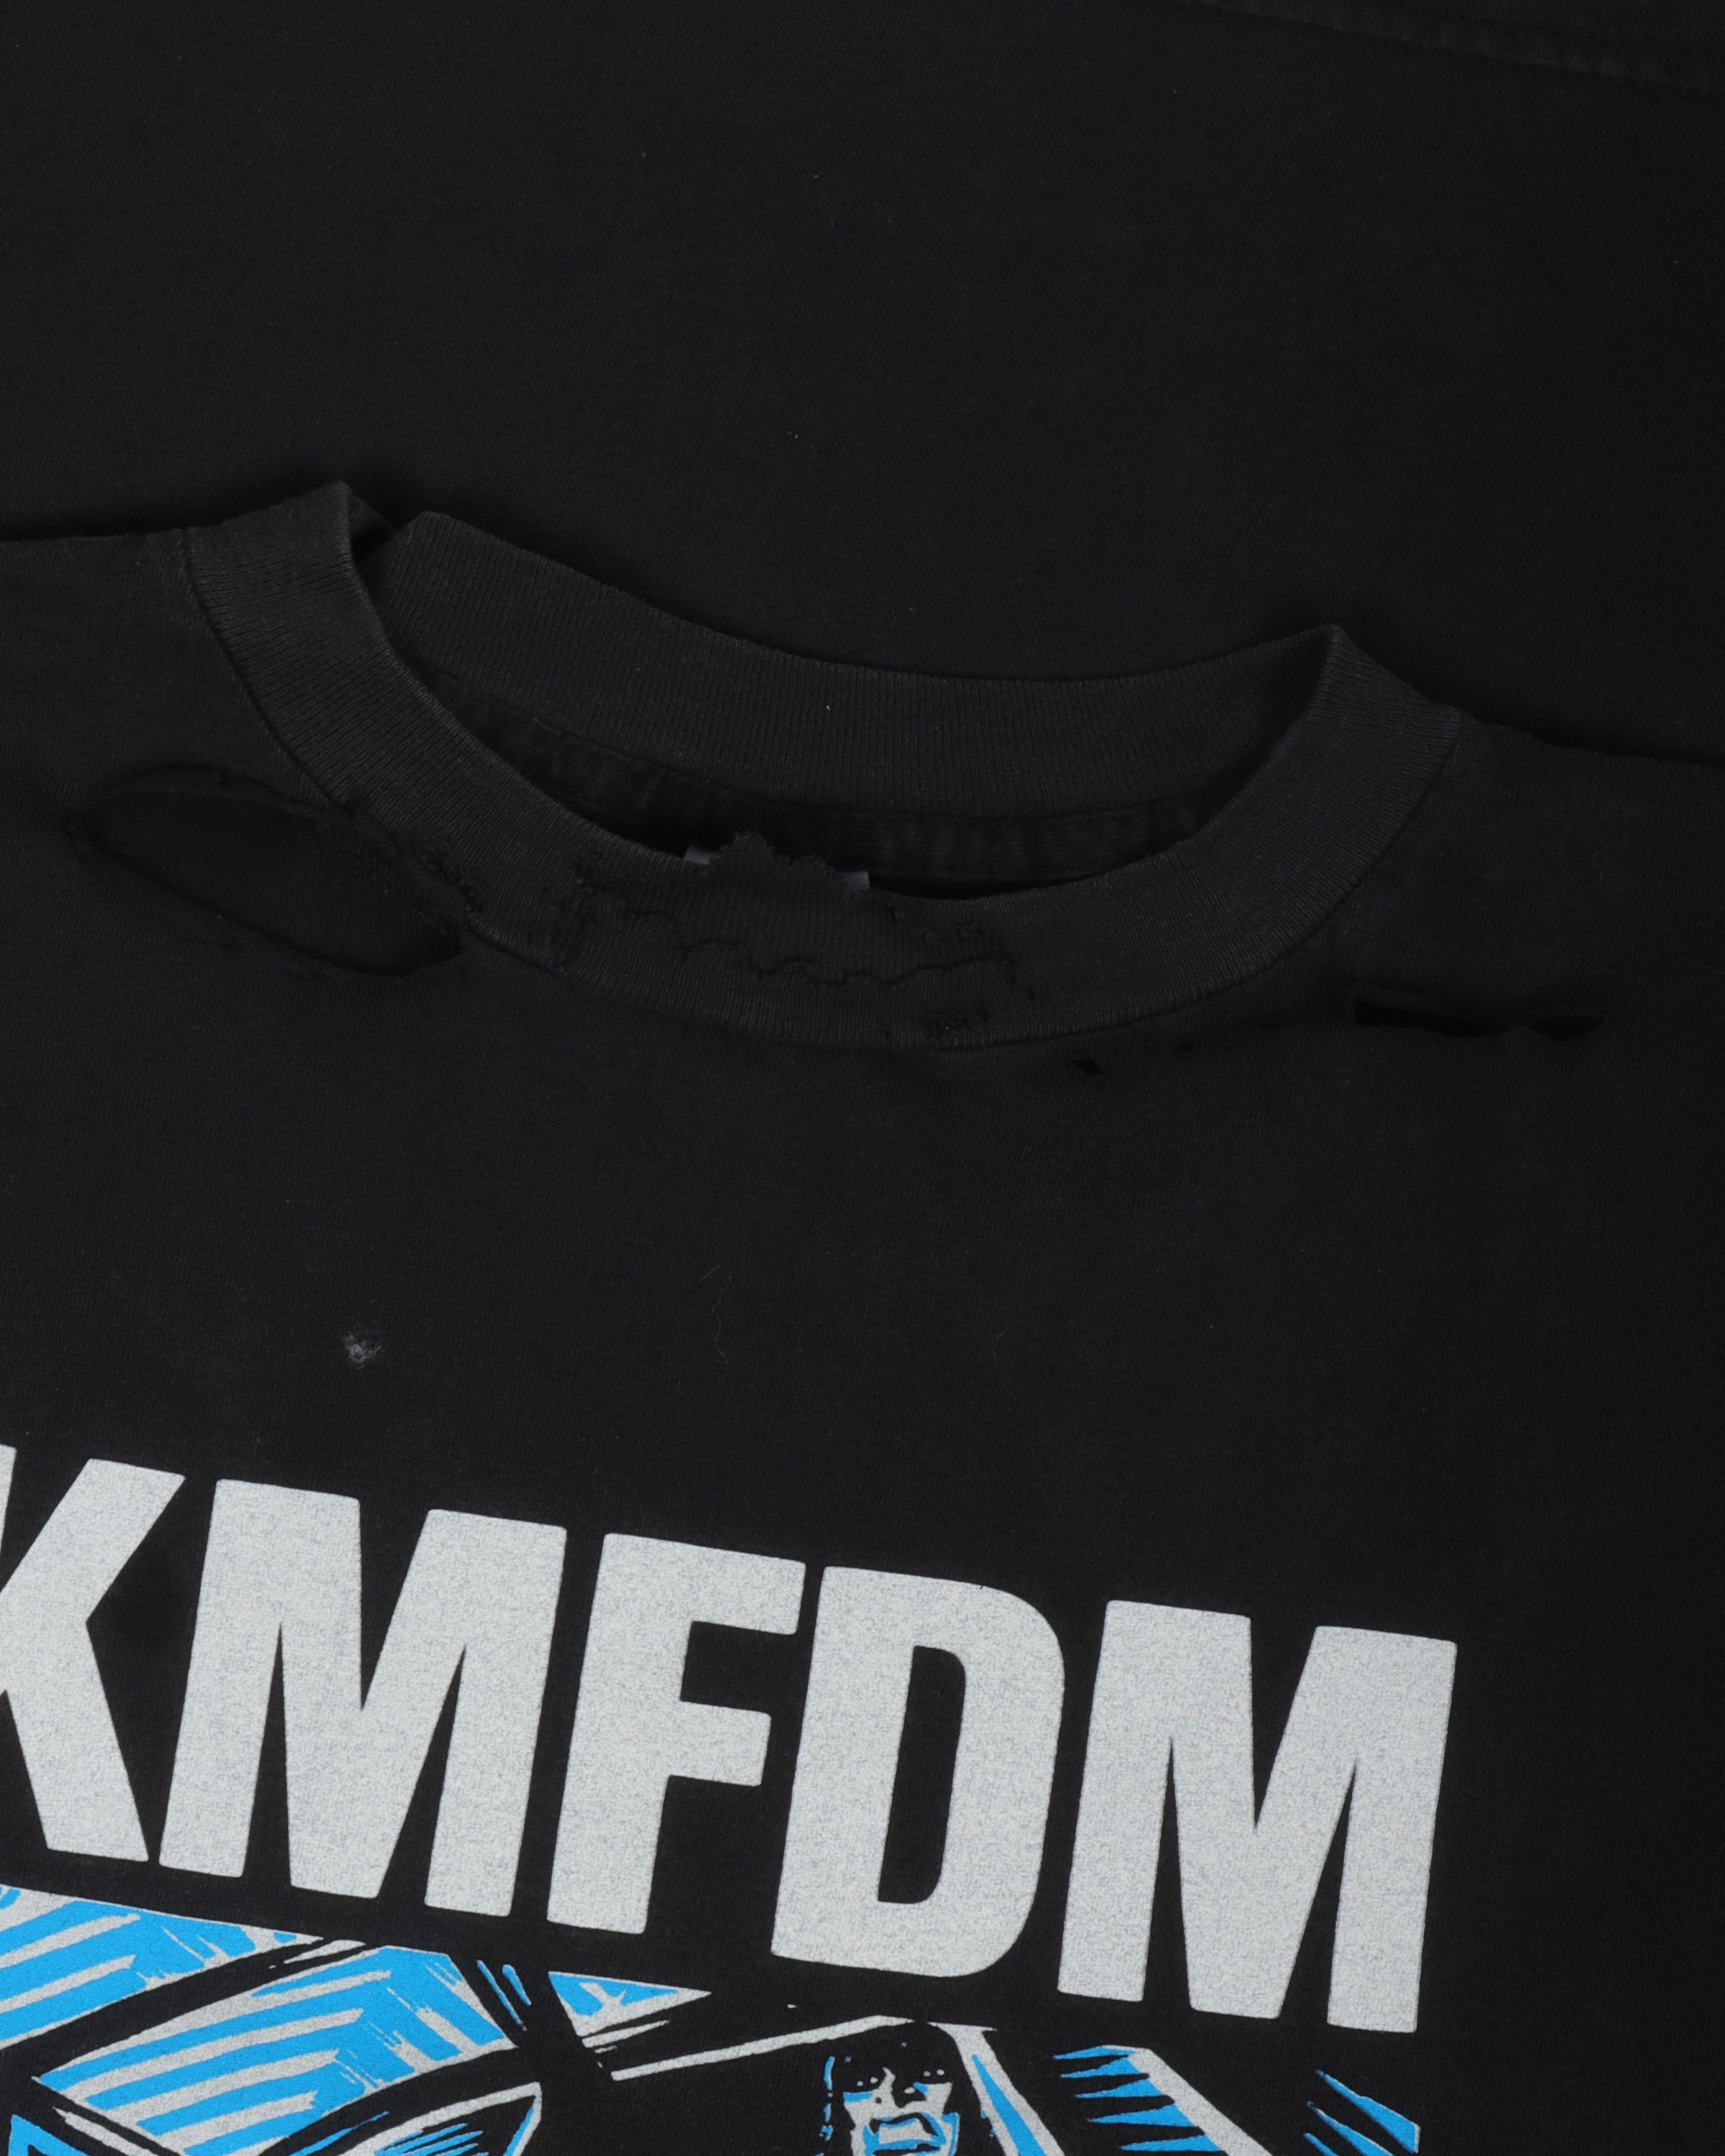 KMFDM "A Drug Against War" T-Shirt